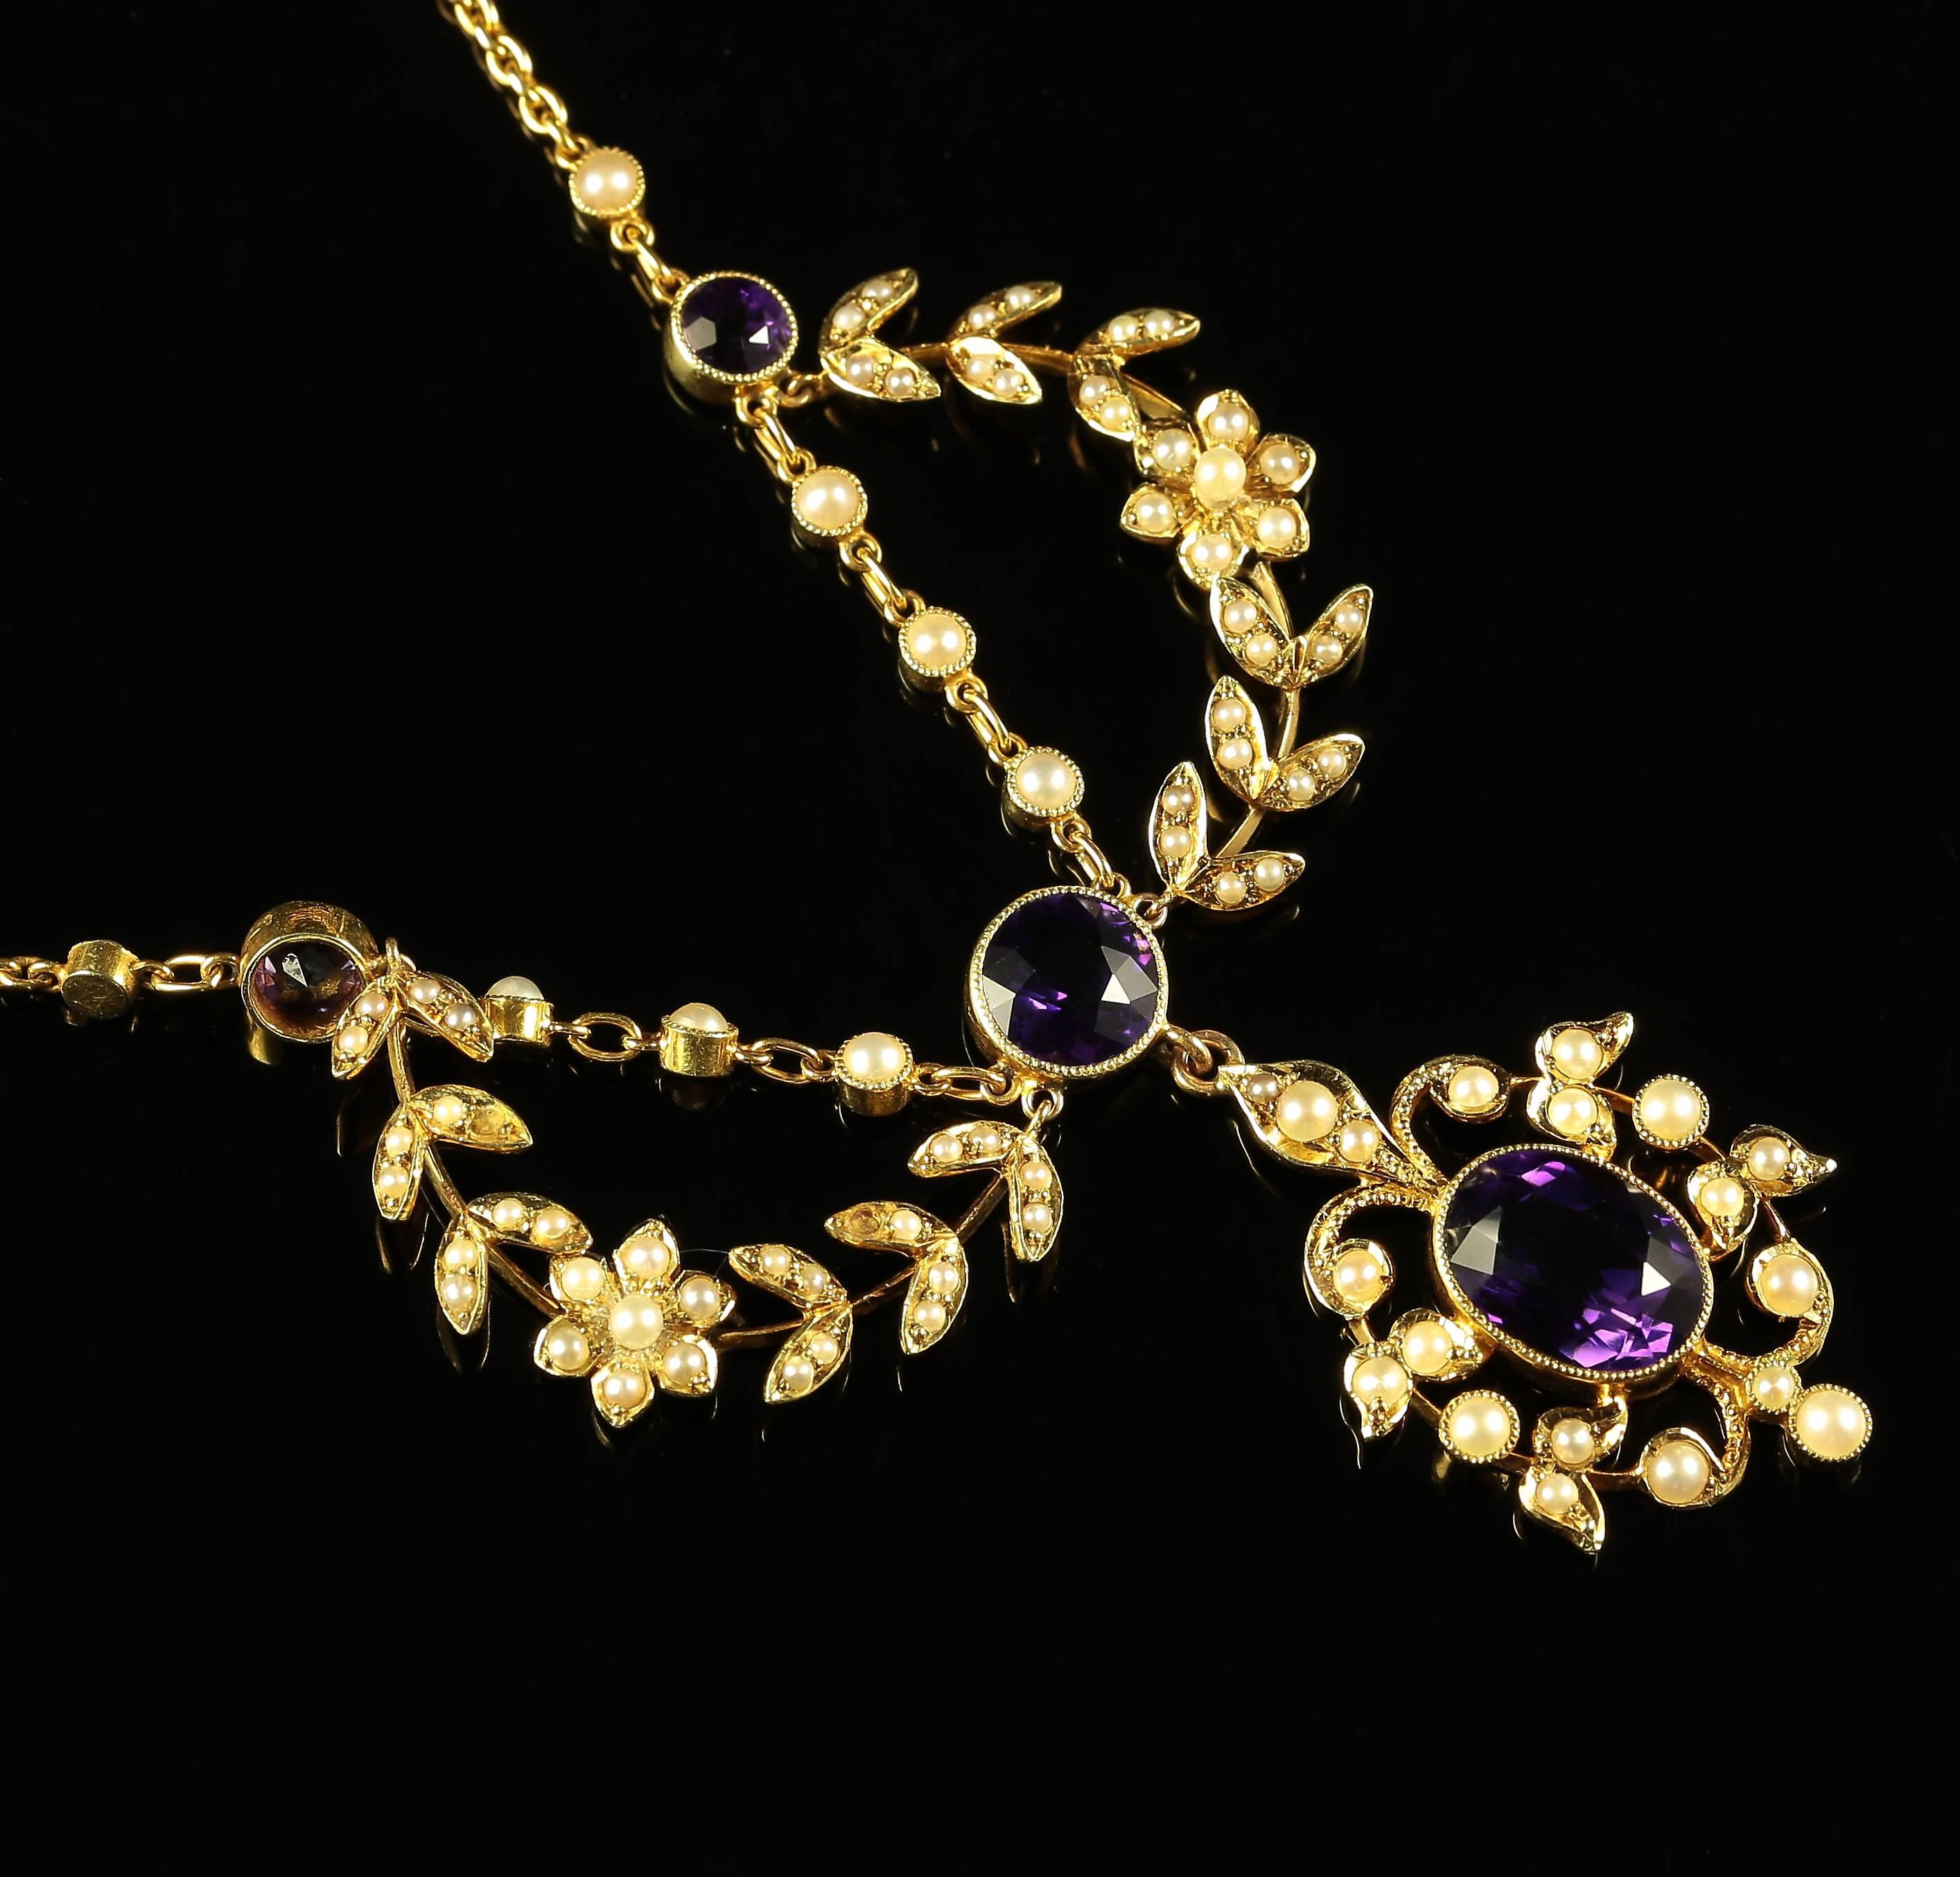 15 carat gold necklace